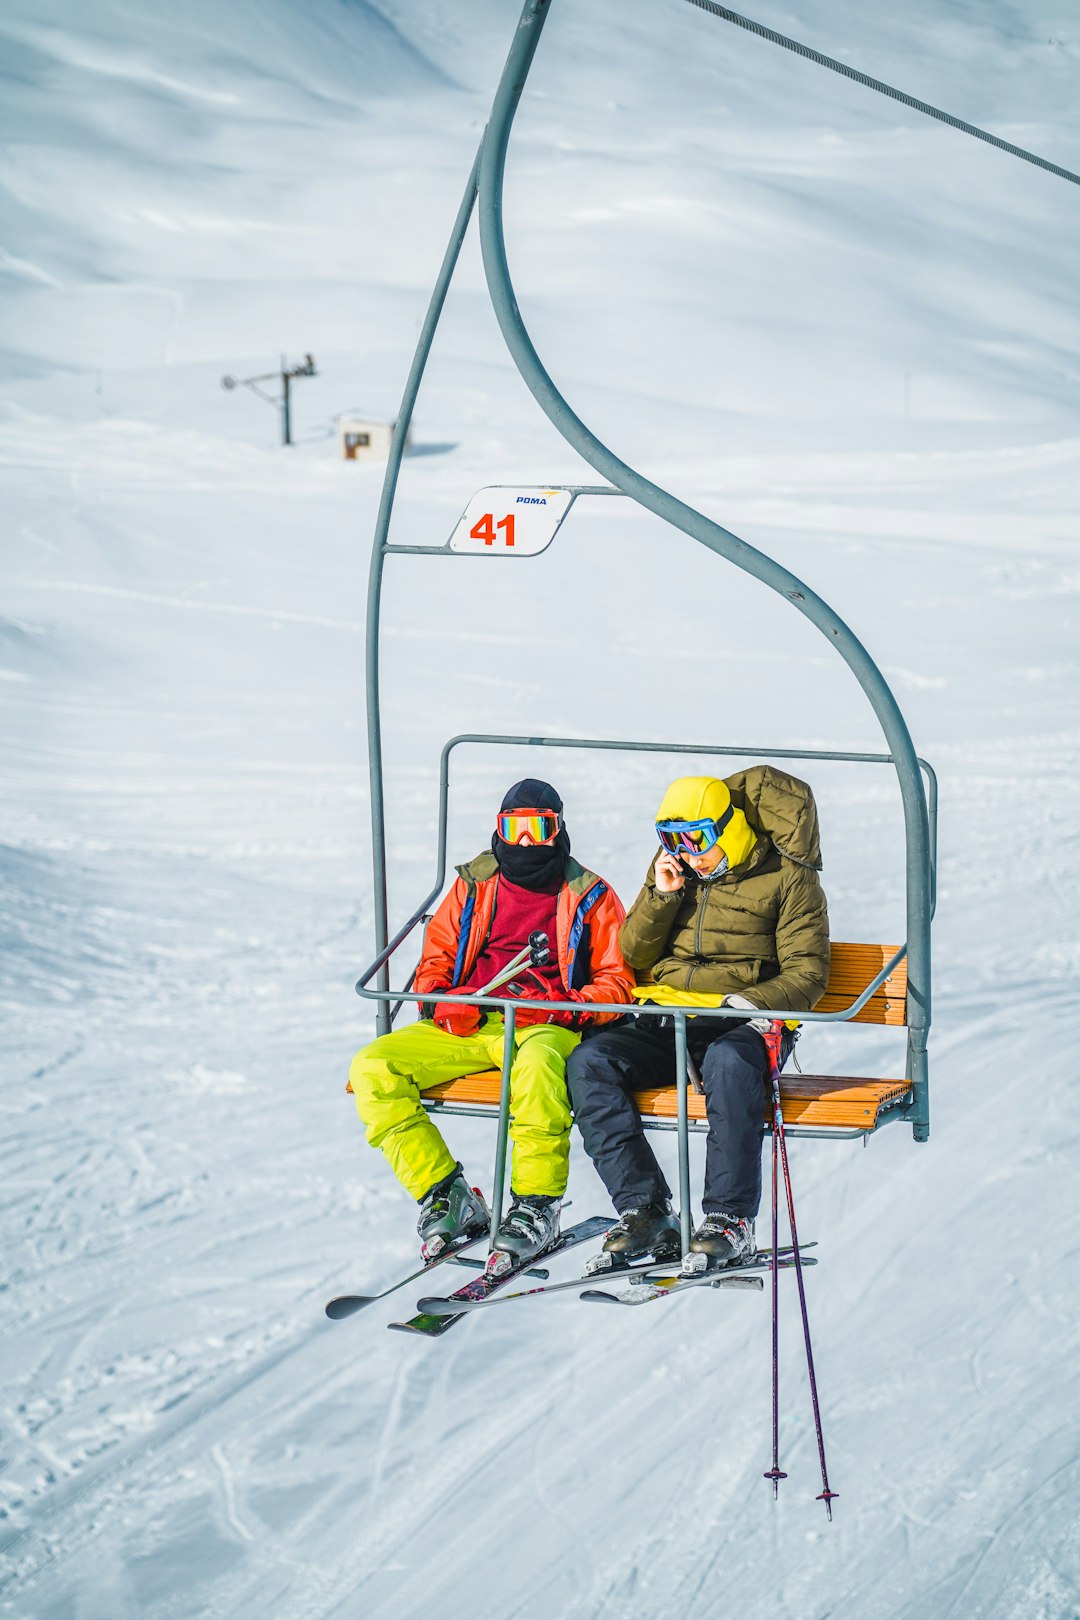 2 children riding ski lift on snow covered ground during daytime